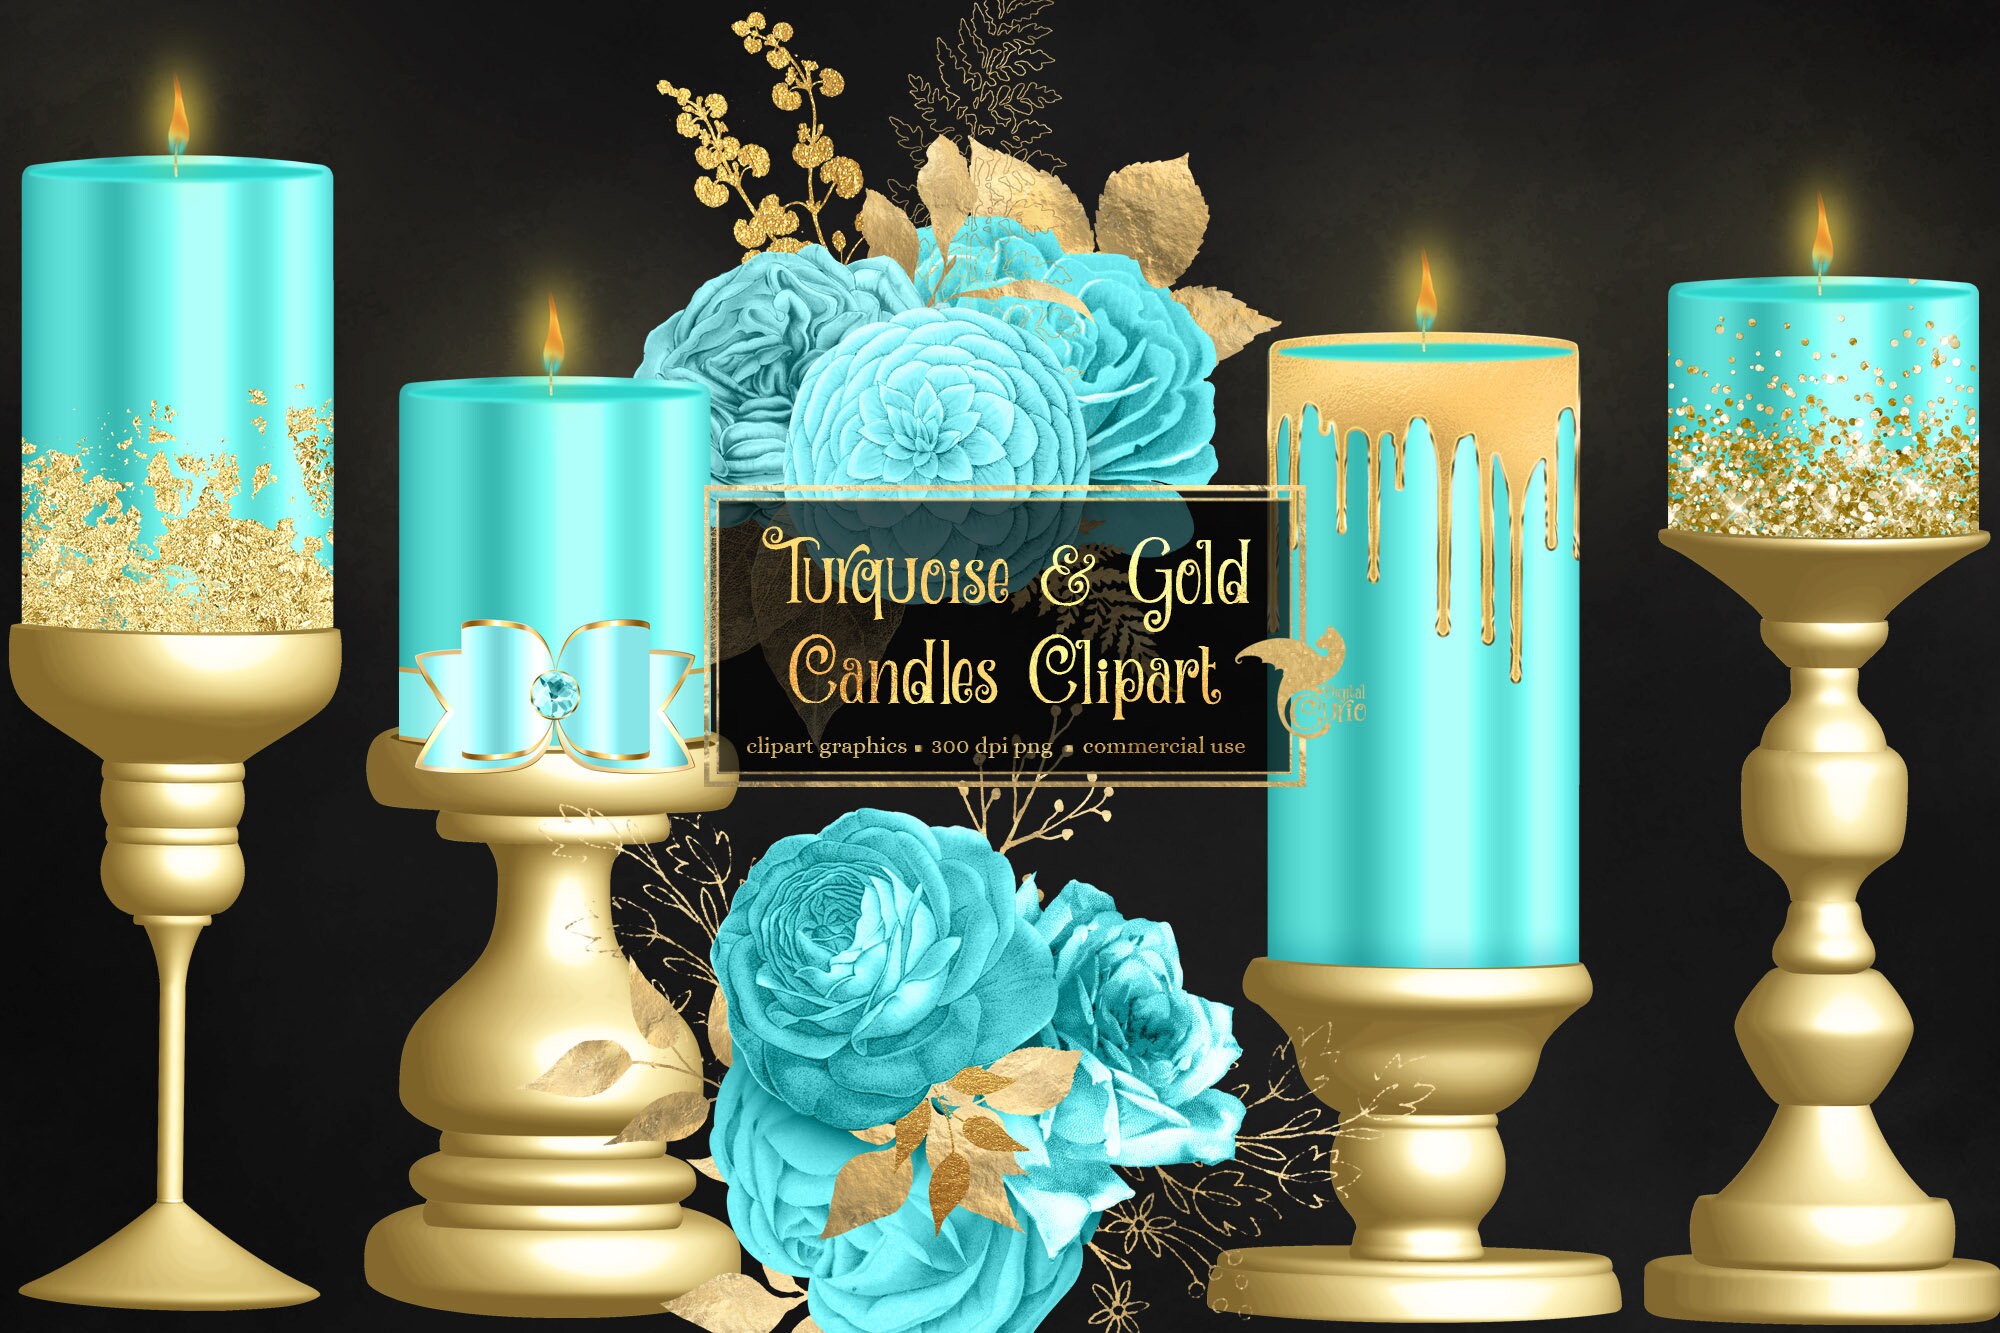 kooi Oude man Retoucheren Turquoise and Gold Candles Clip Art digital candle graphics - Etsy België